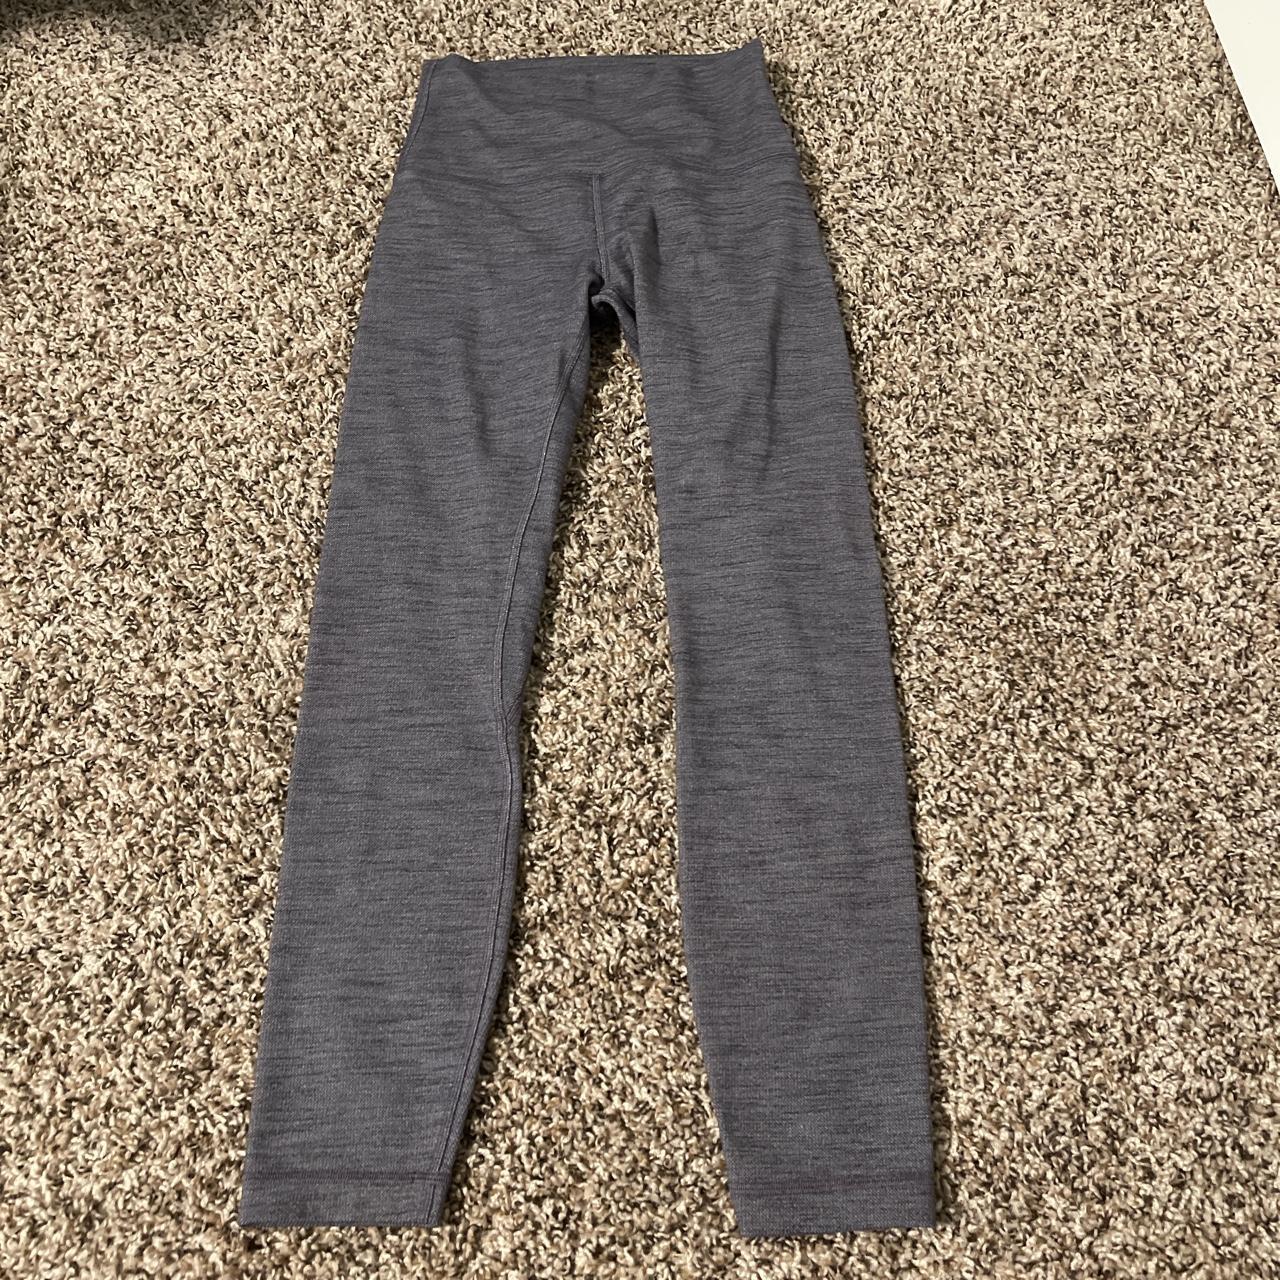 Lululemon grey leggings - Perfect condition and - Depop